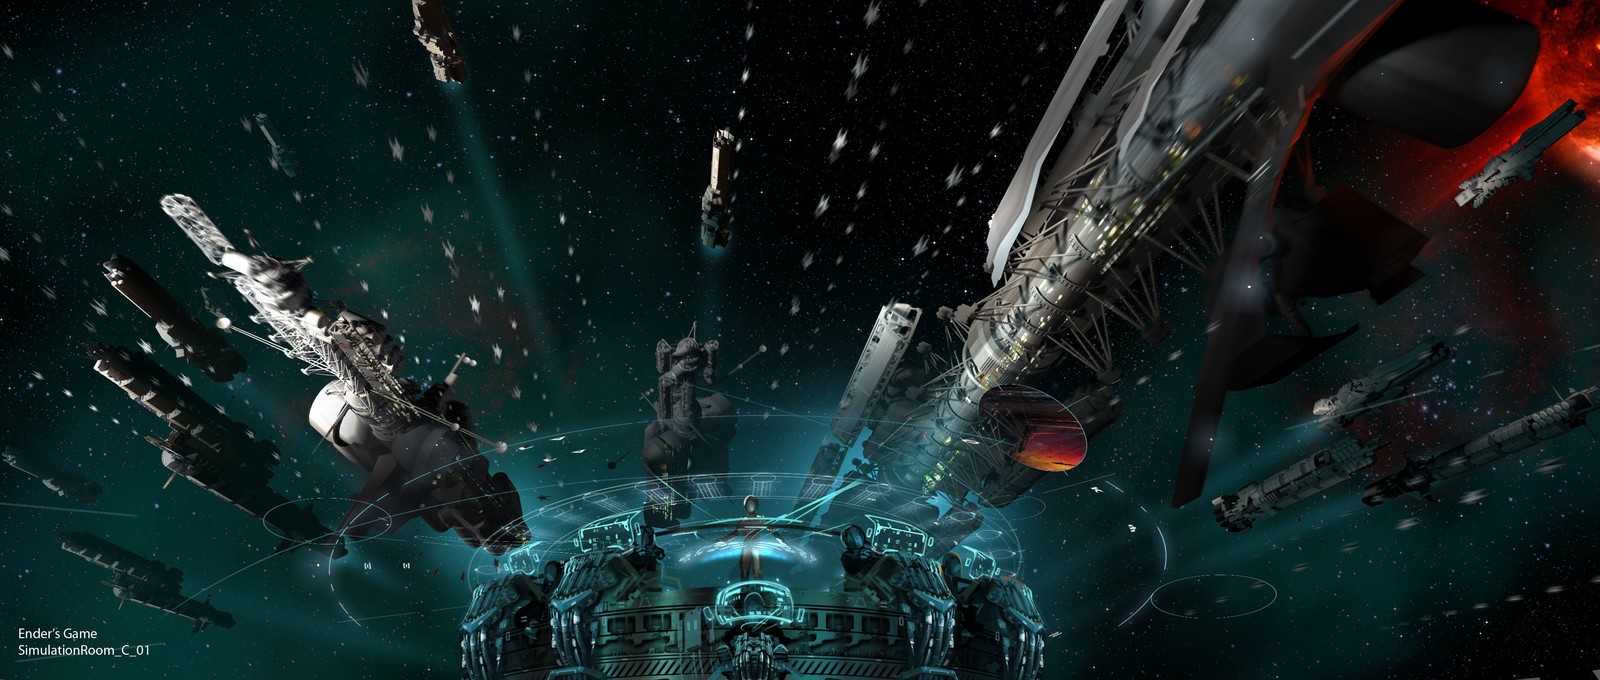 "Enders Game" movie concept art work.